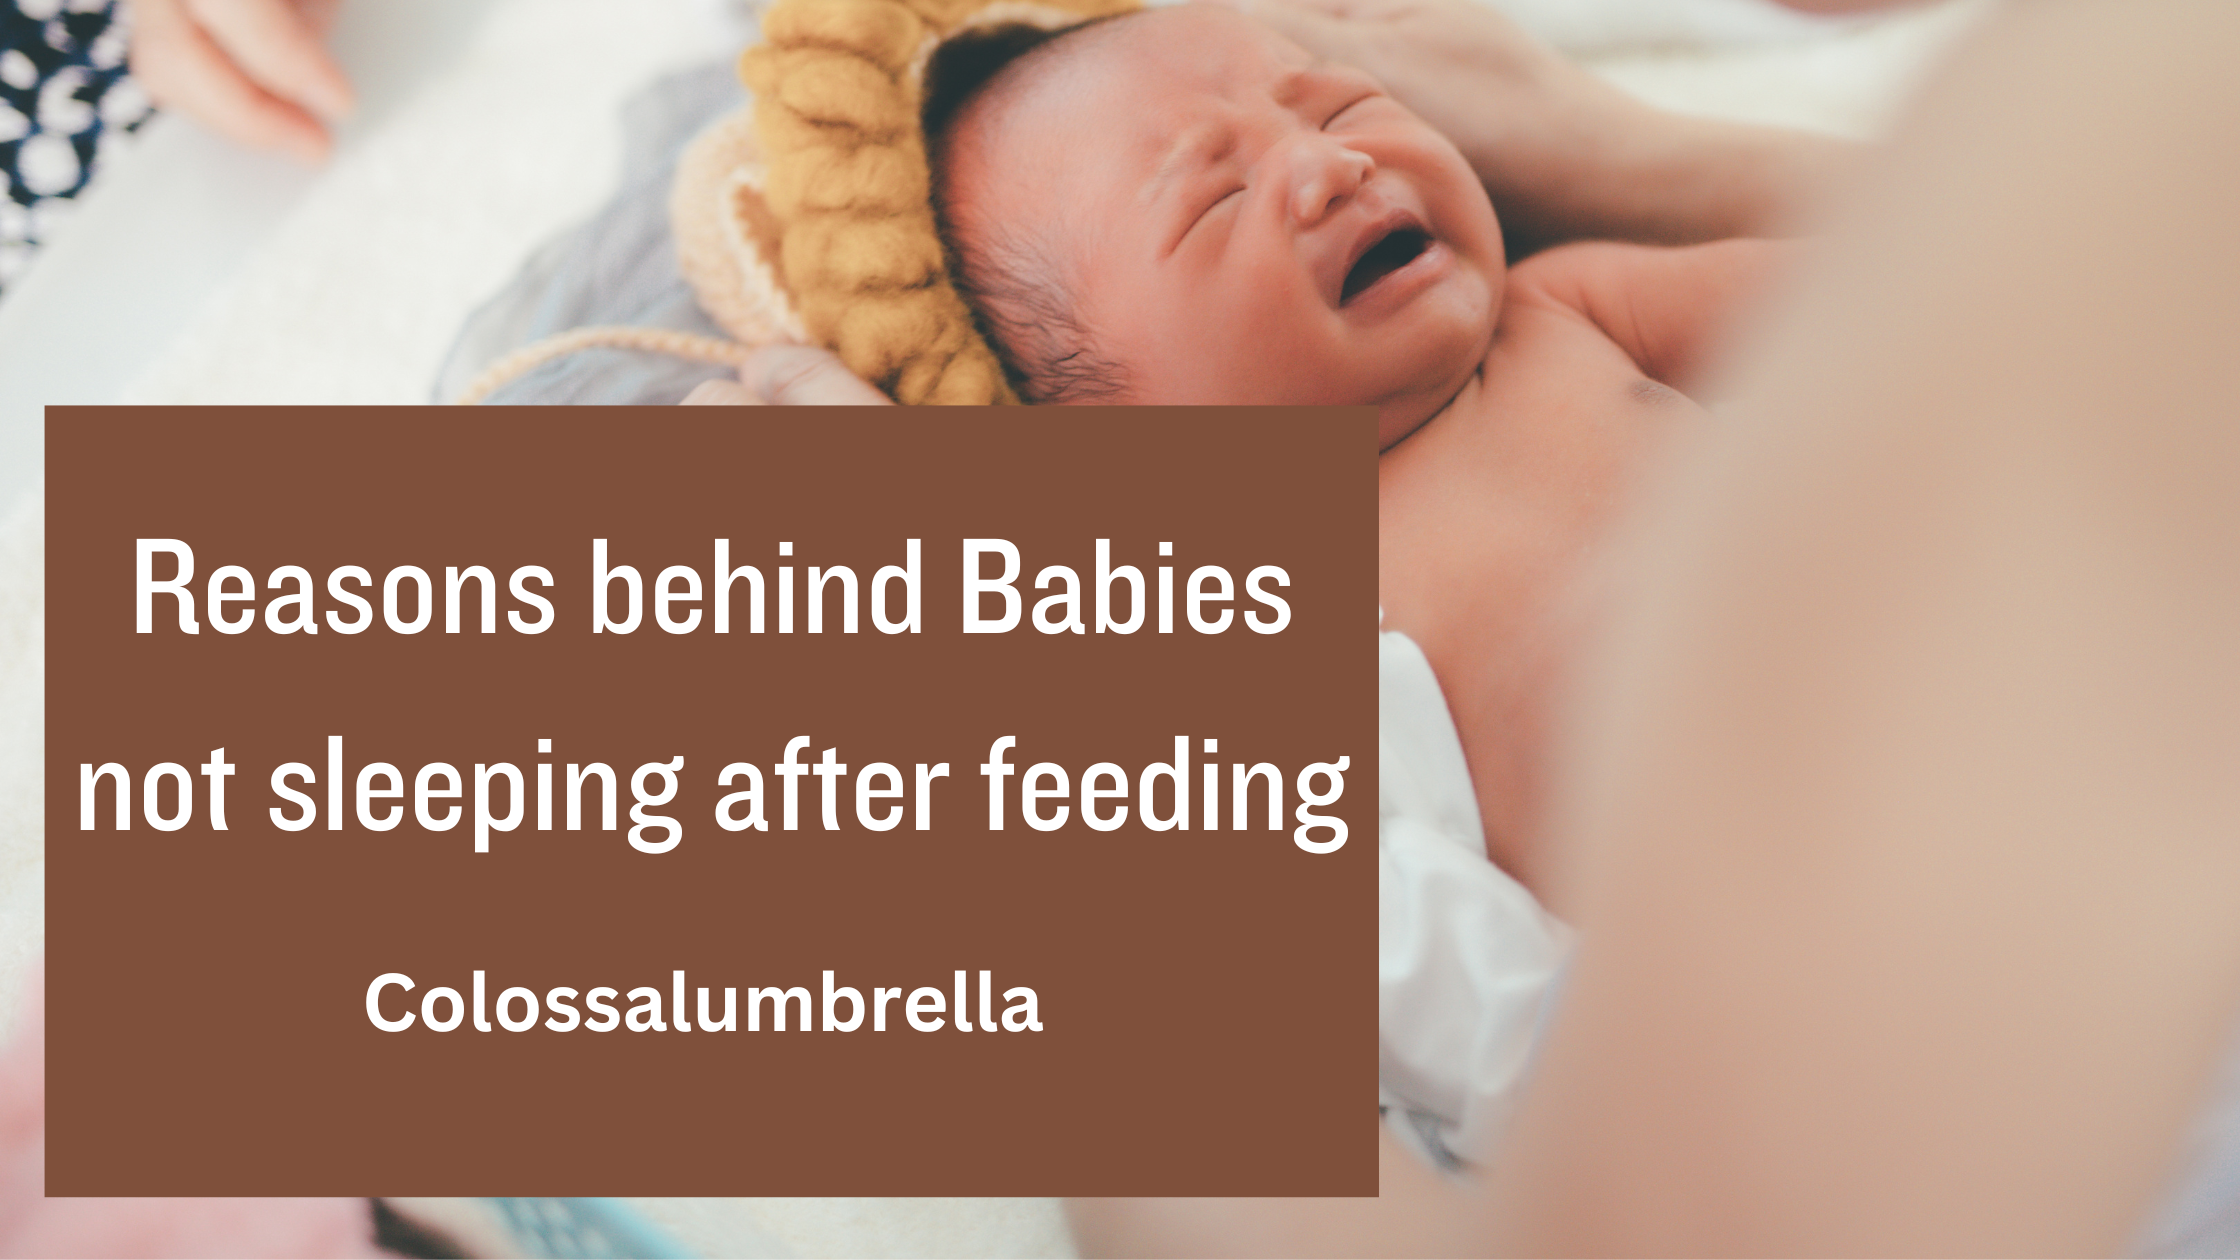 5 reasons behind newborn not sleeping after feeding by Colossalumbrella